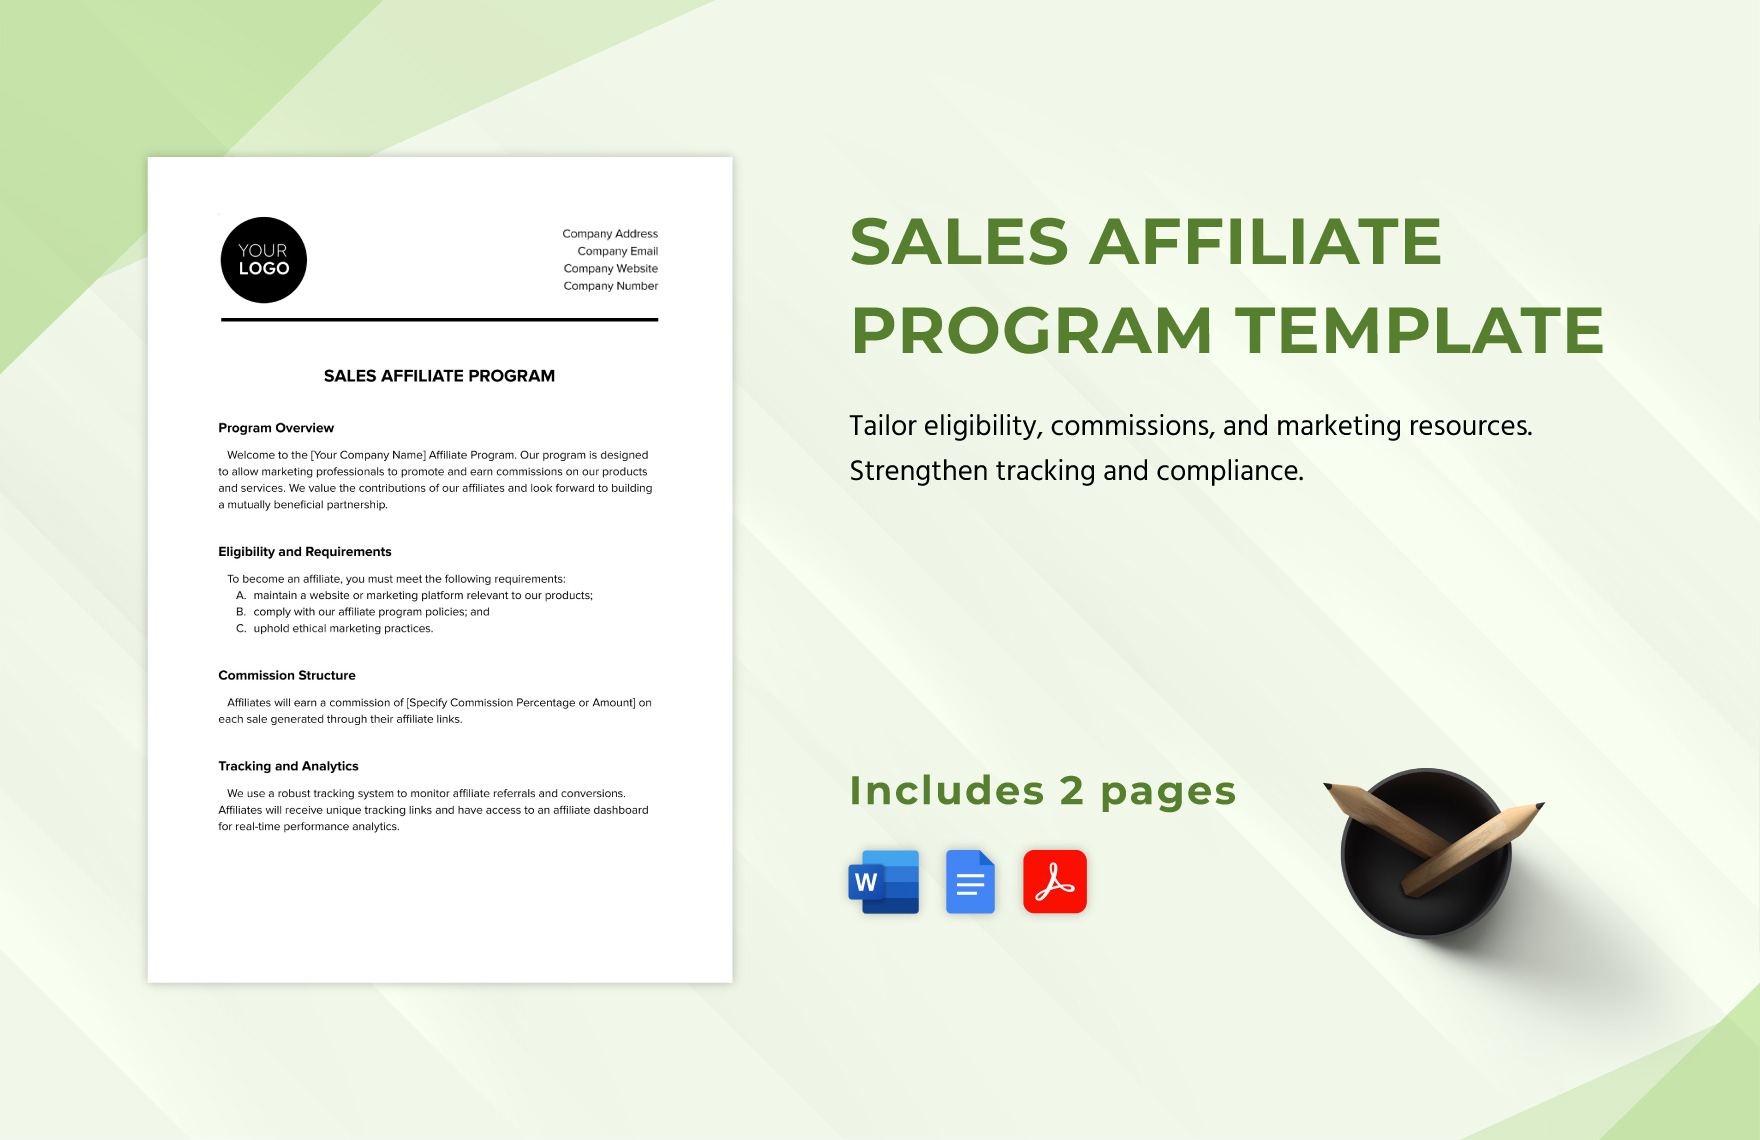 Sales Affiliate Program Template in Word, Google Docs, PDF